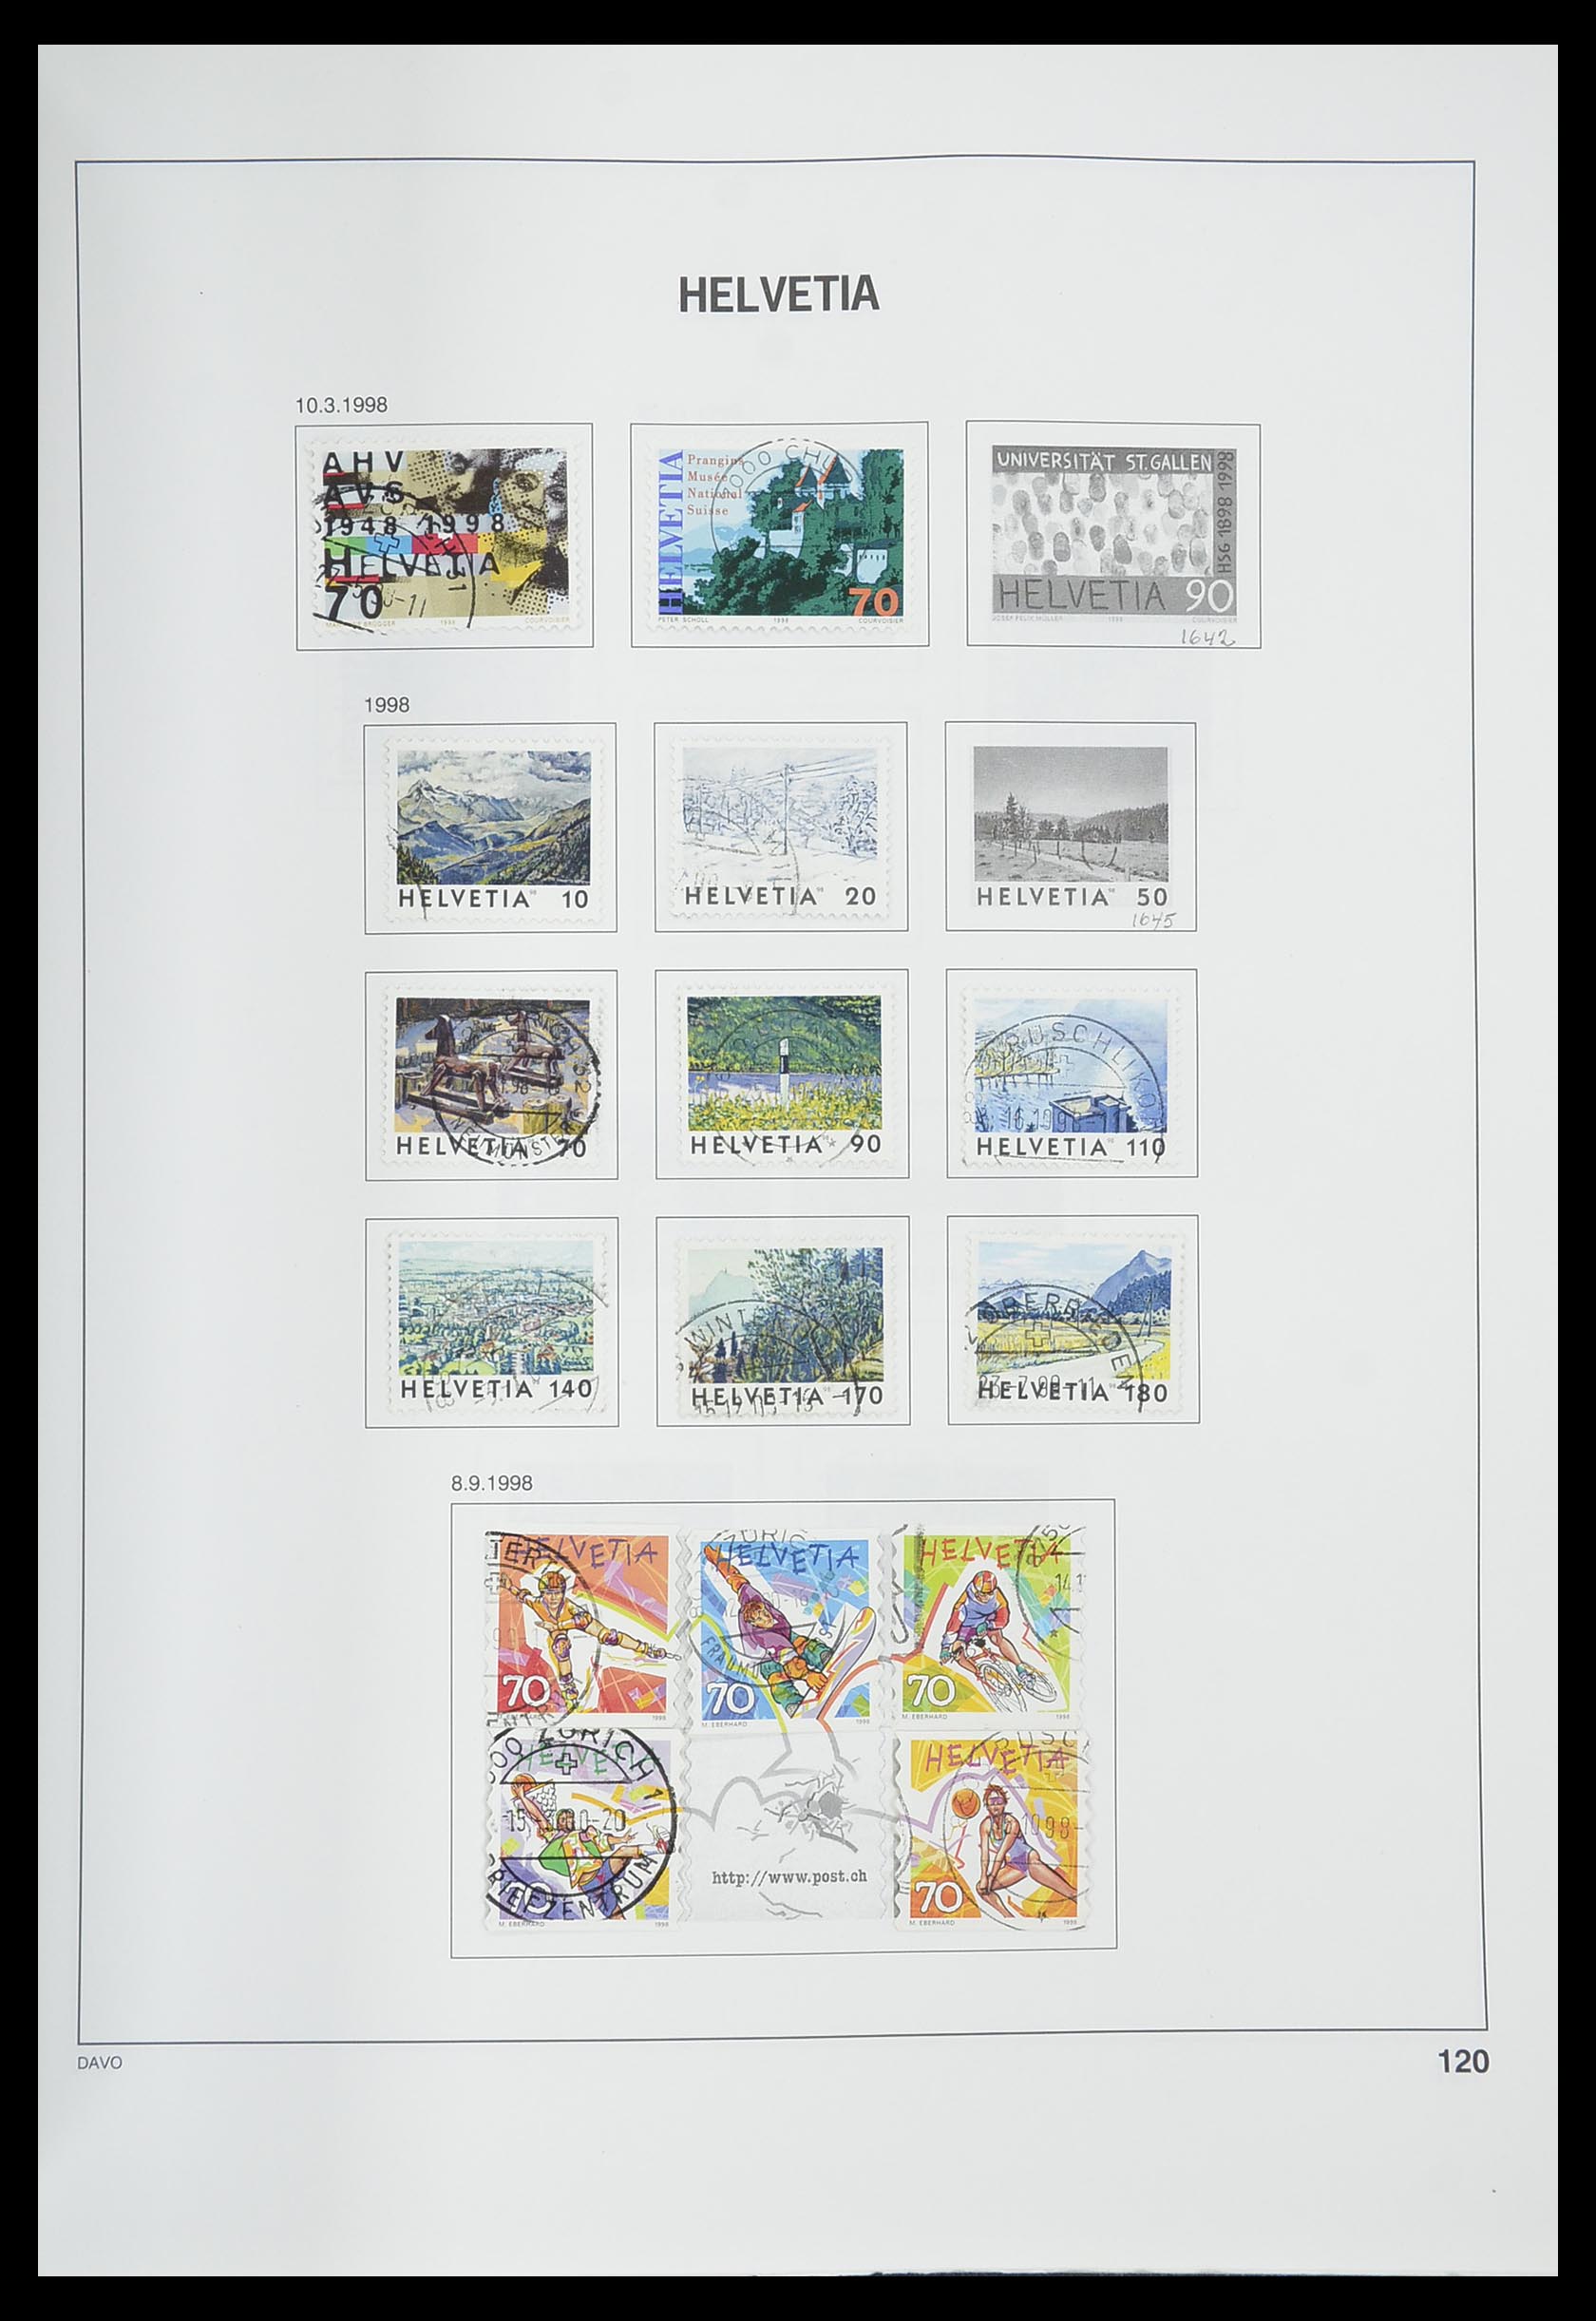 33559 121 - Stamp collection 33559 Switzerland 1850-2000.